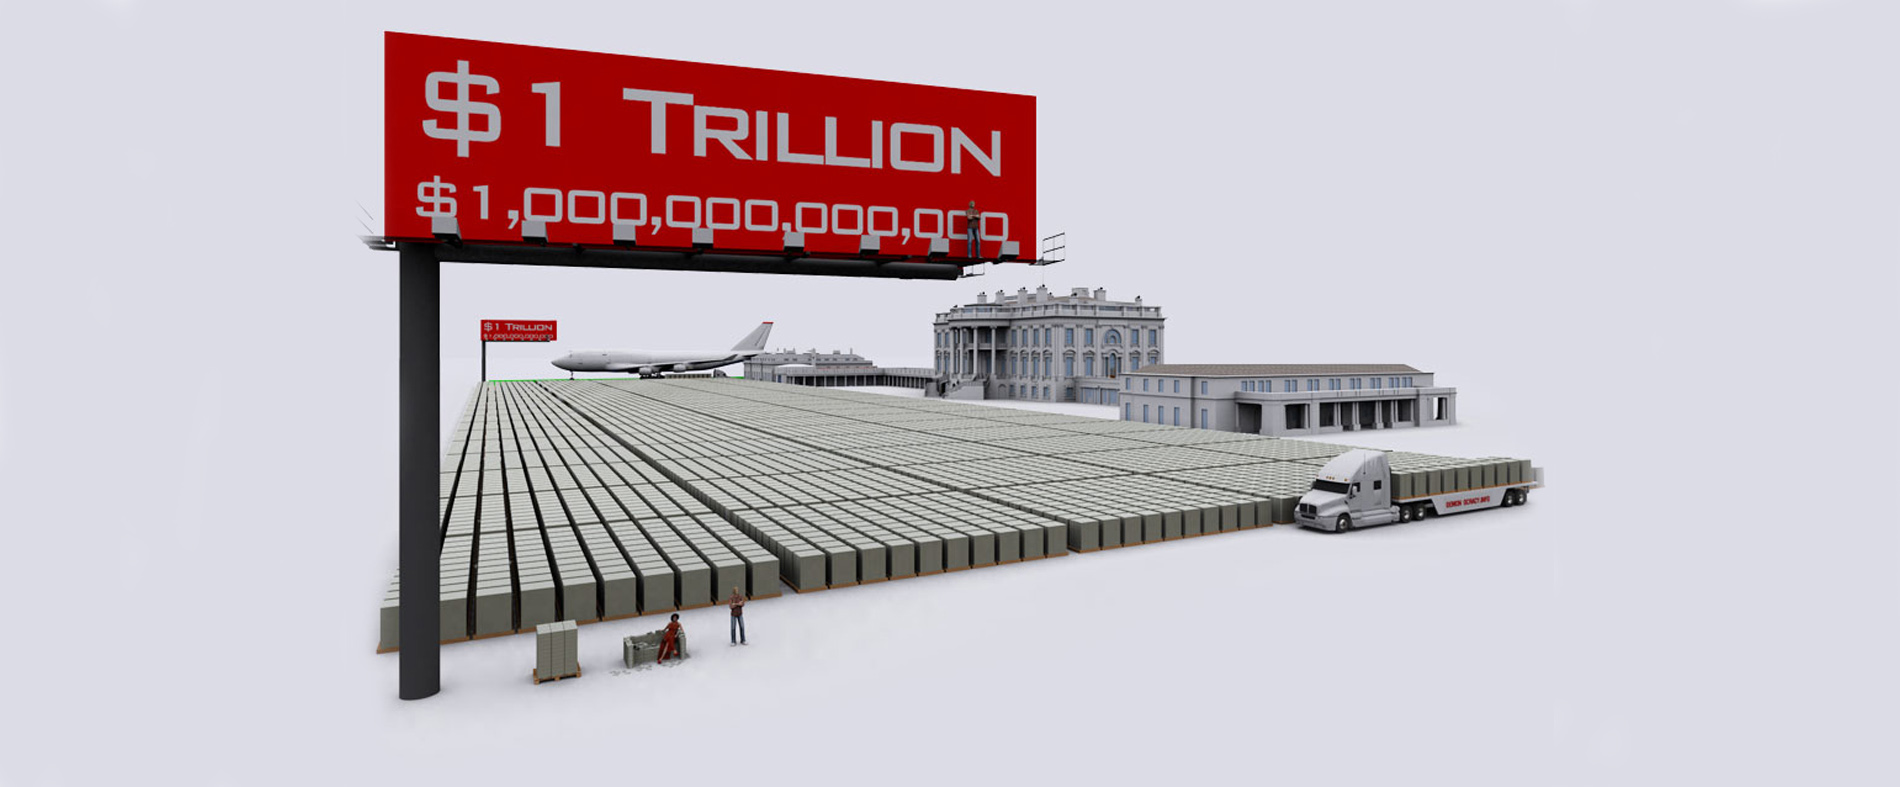 $20 Trillion of U.S. Debt Visualized Using Stacks of $100 Bills